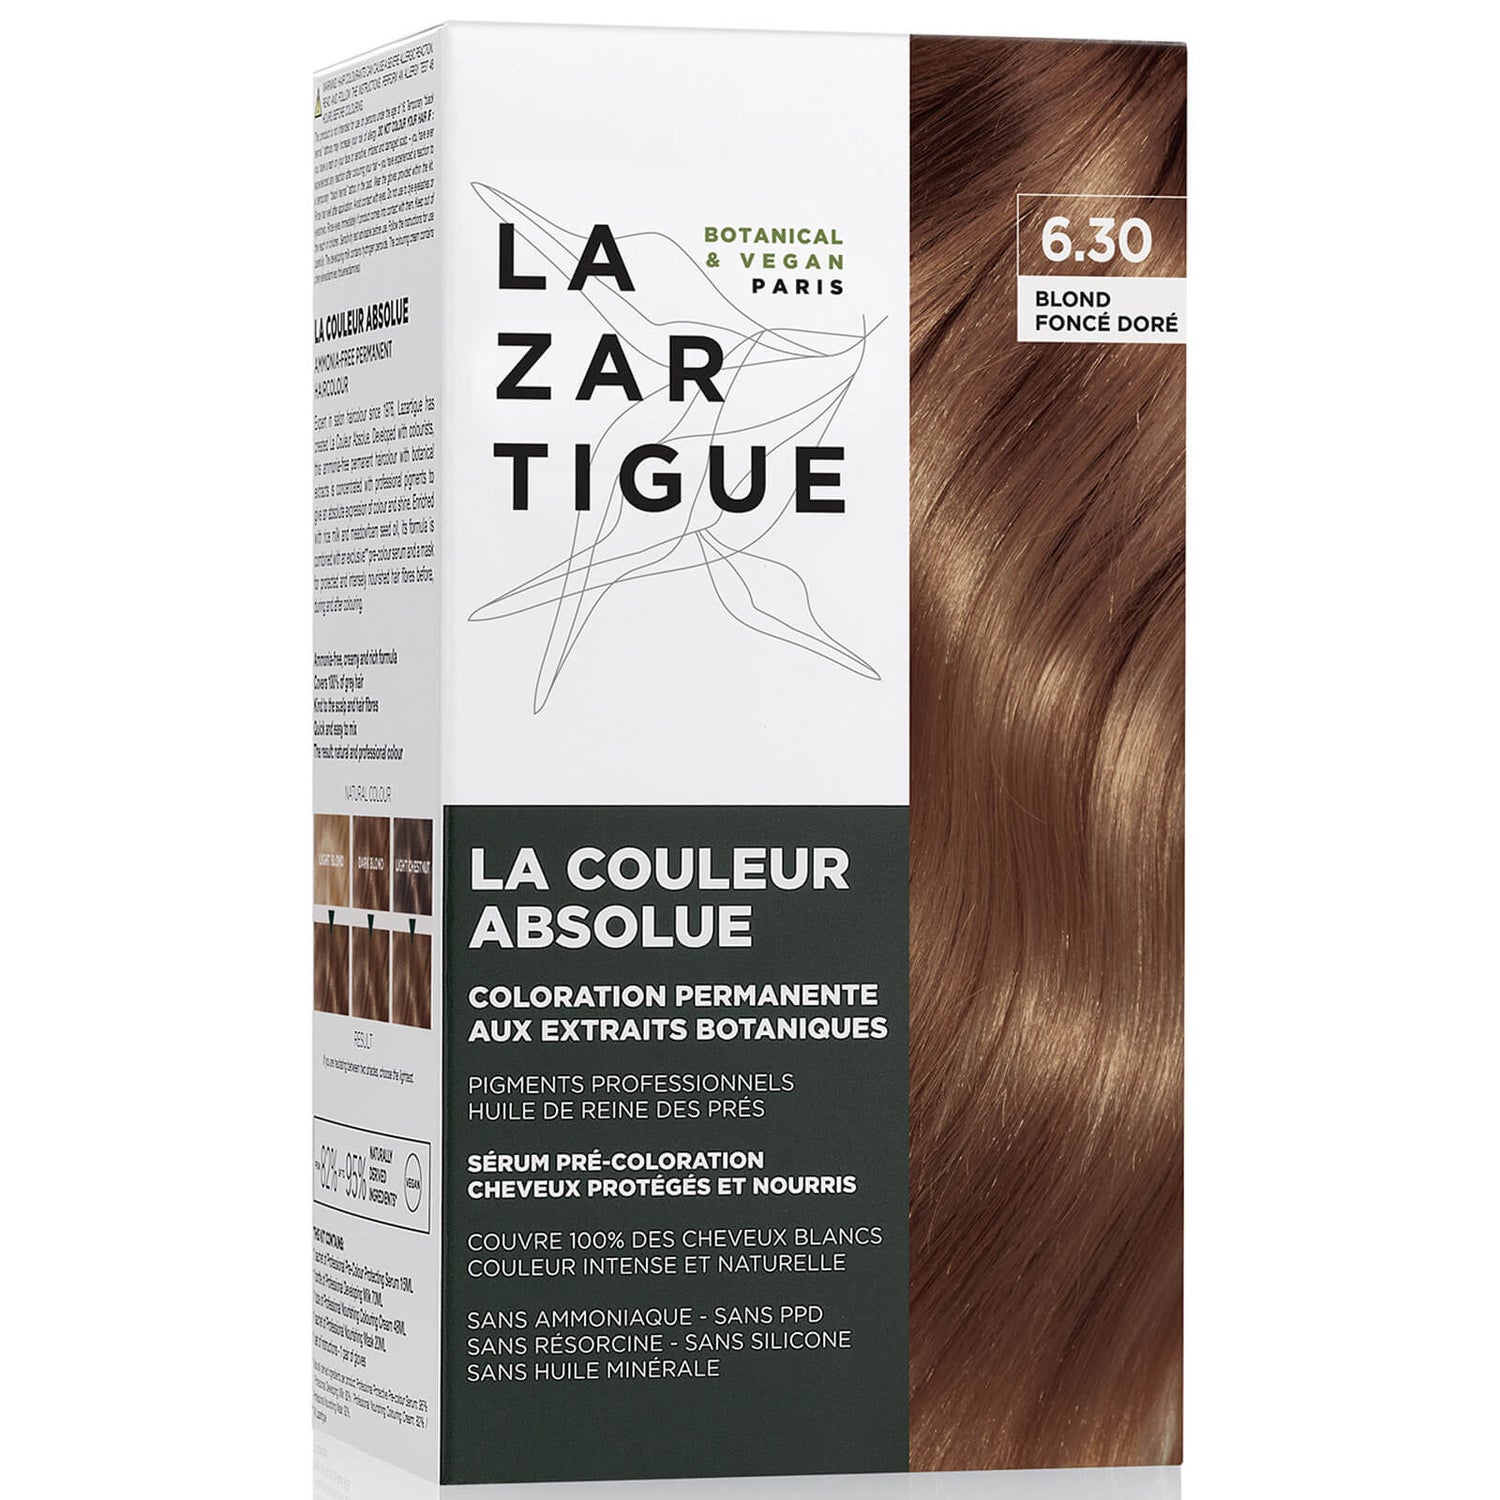 Lazartigue Absolute Colour - 6.30 Golden Dark Blonde 153ml